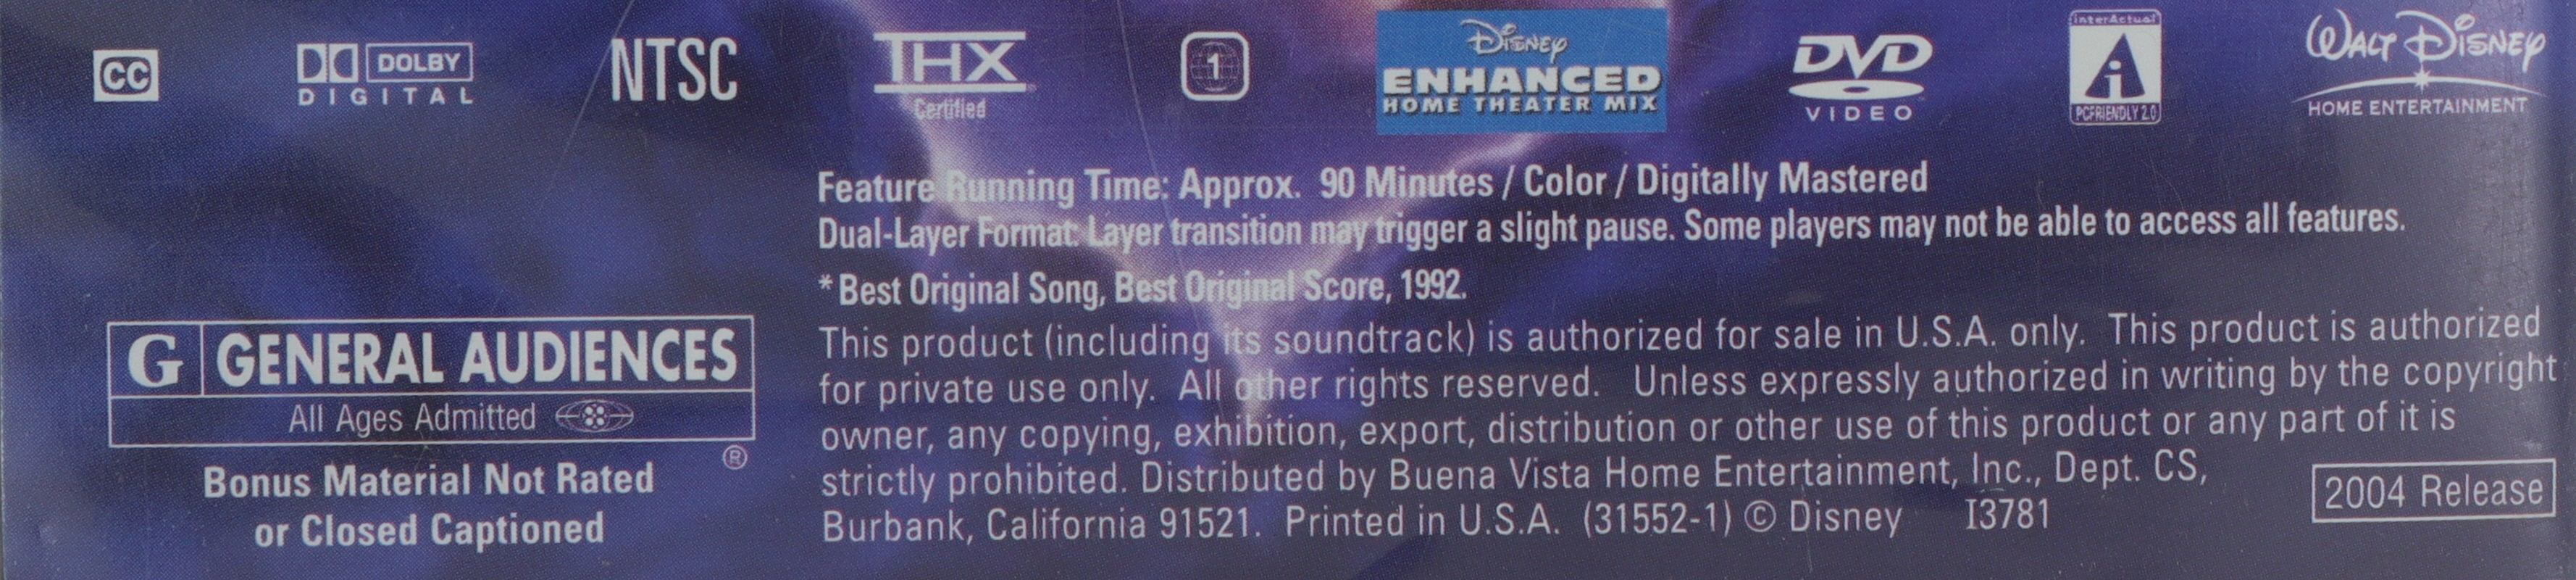 Walt Disney Aladdin 2 Disc Platinum Special Edition (DVD)